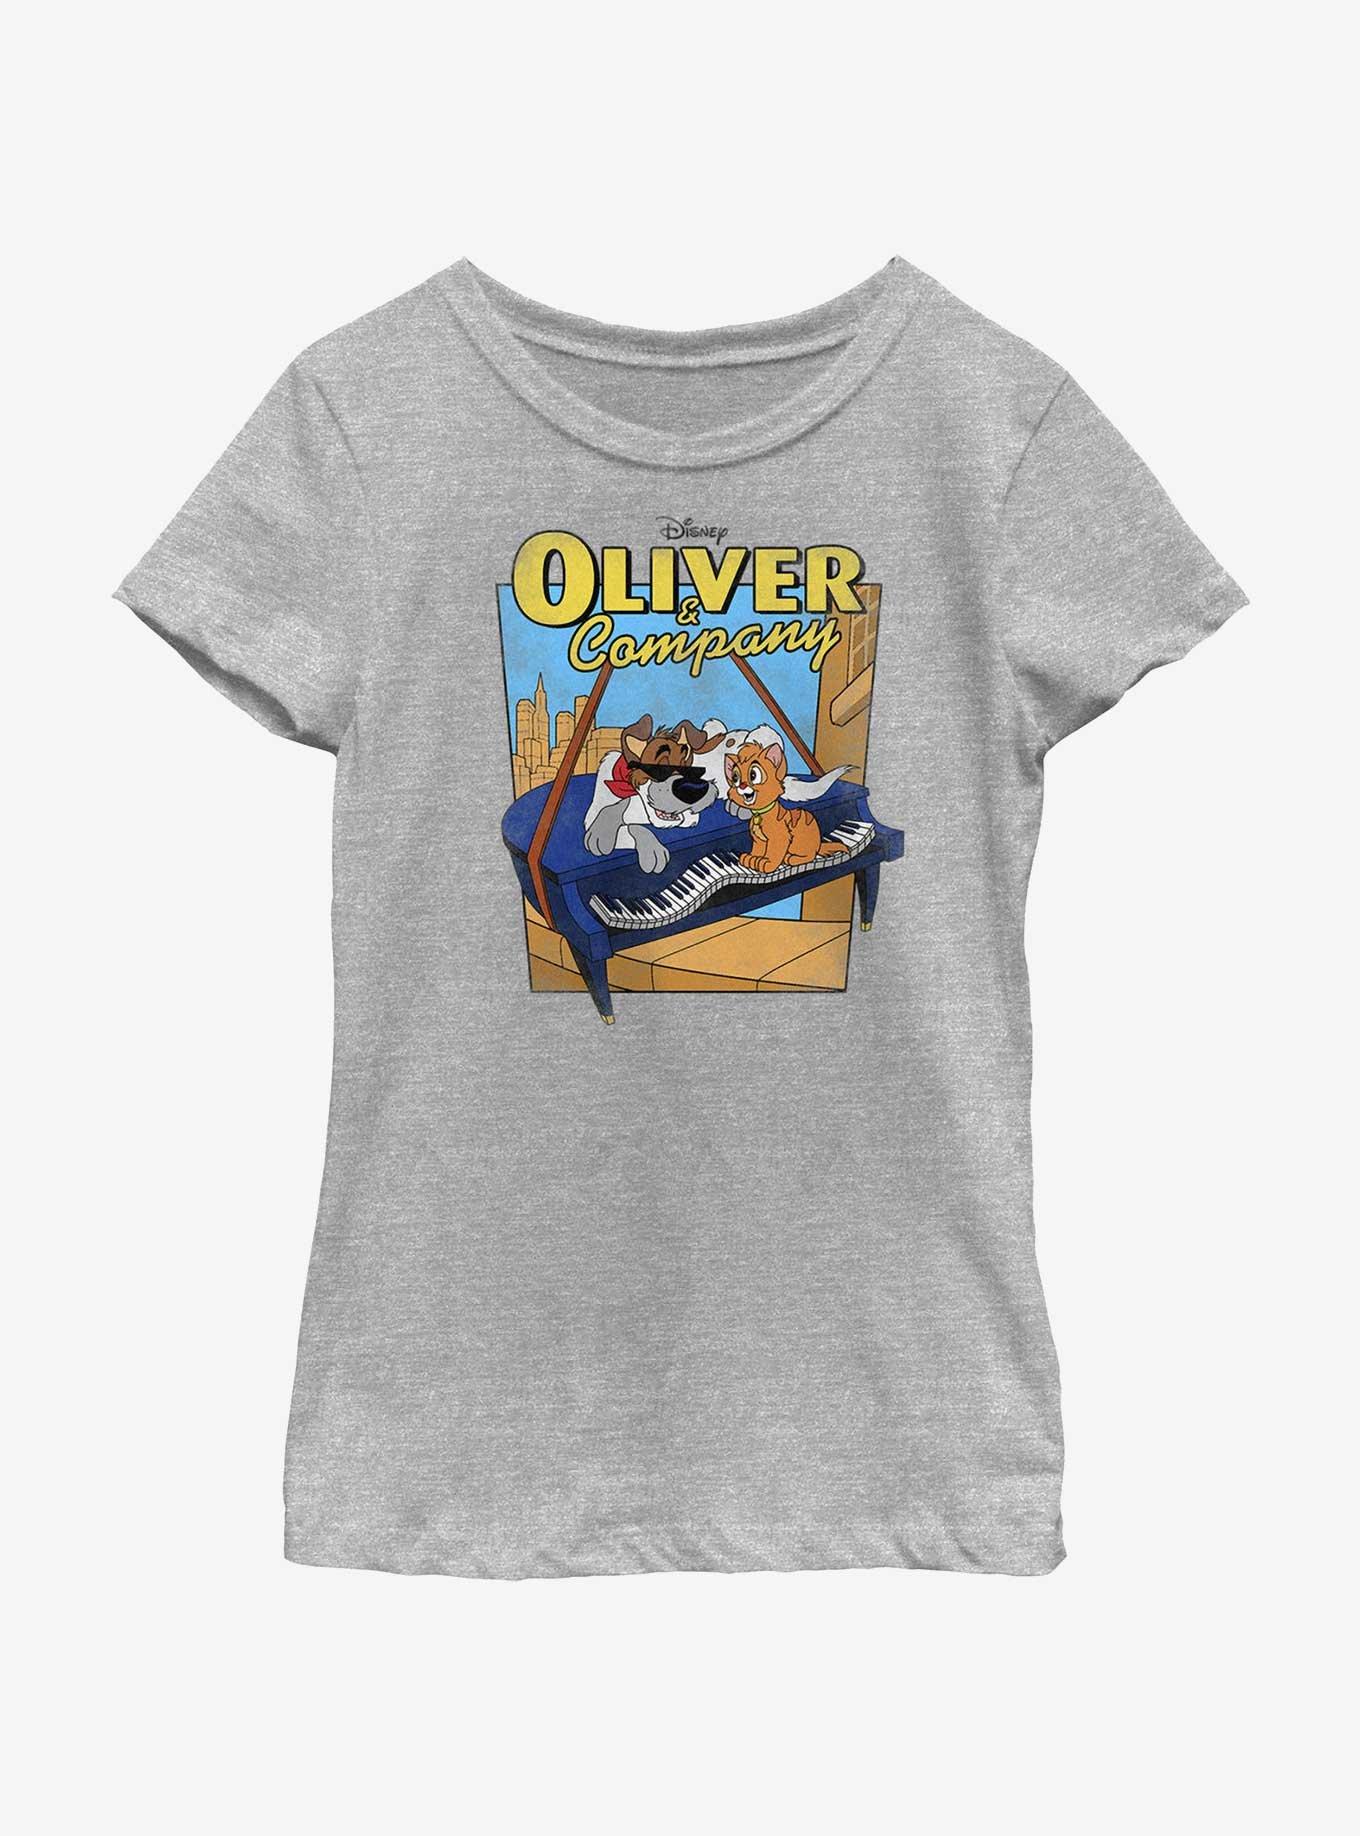 Disney Oliver & Company Piano Youth Girls T-Shirt, ATH HTR, hi-res